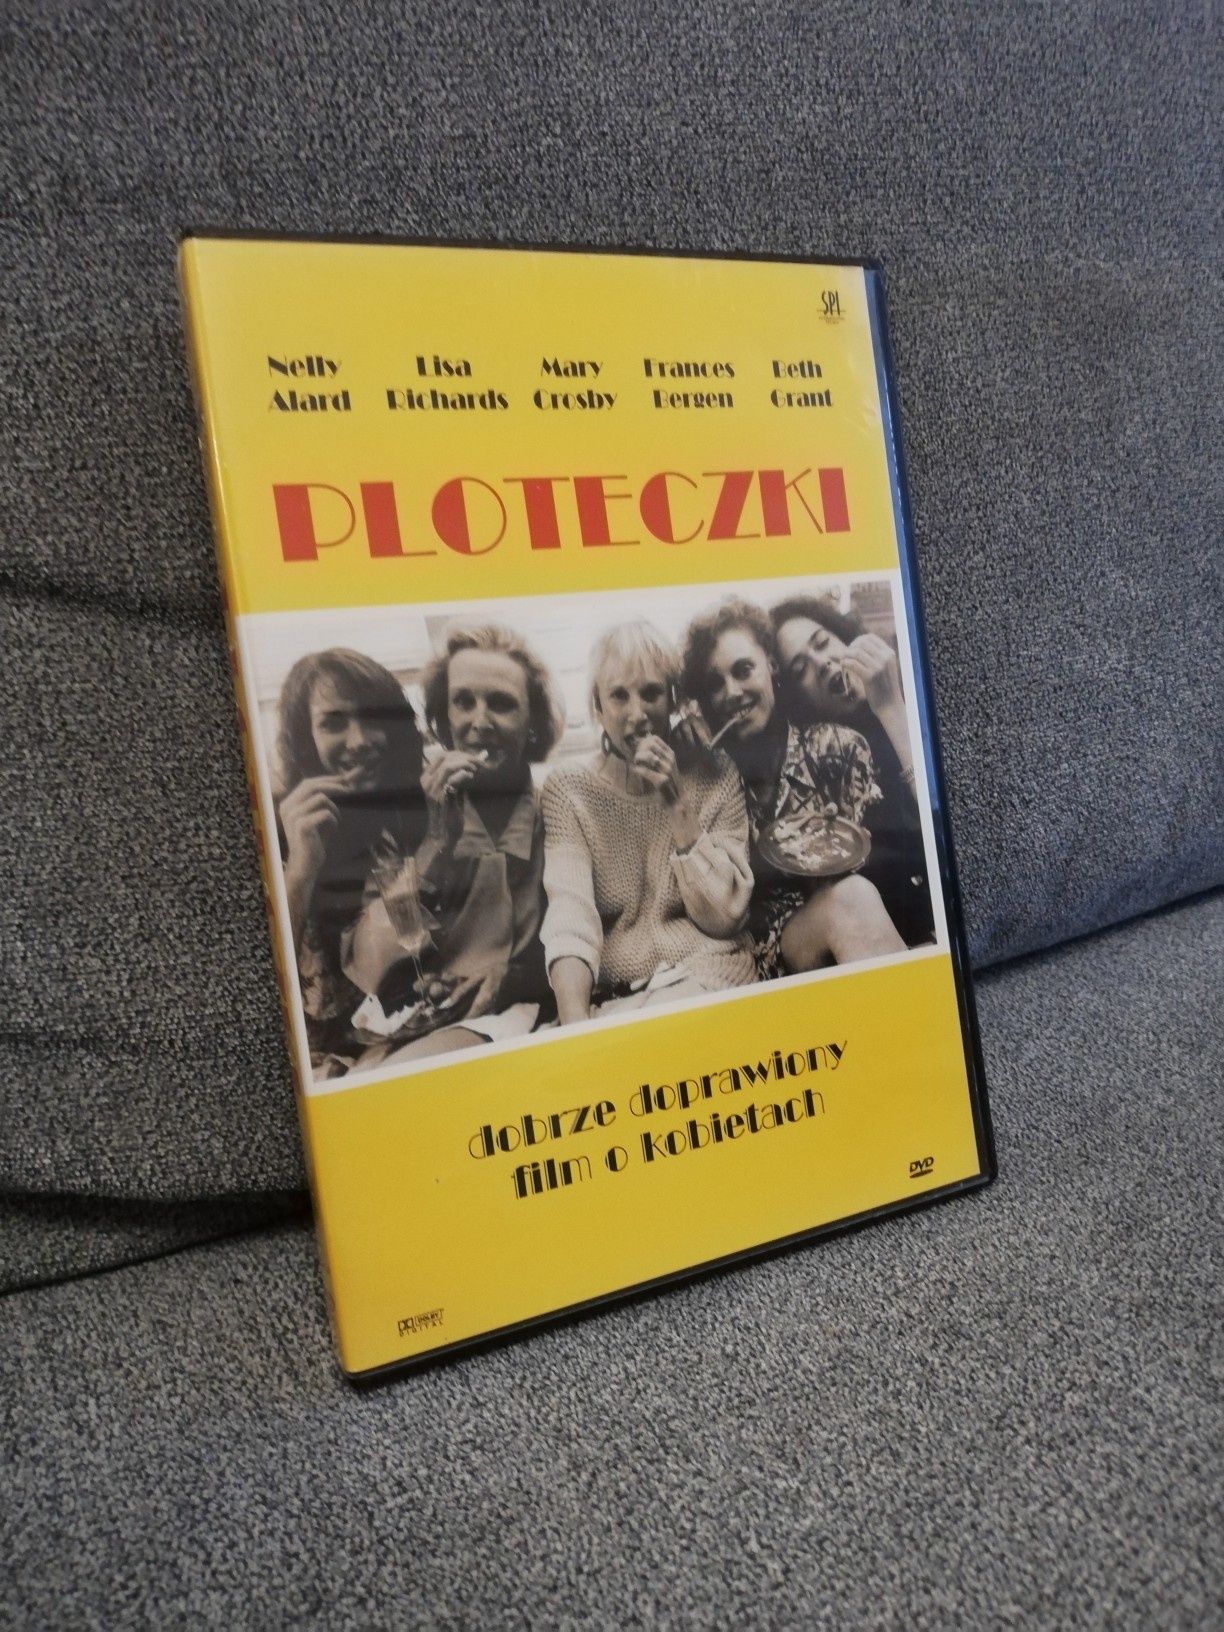 Ploteczki DVD BOX Kraków